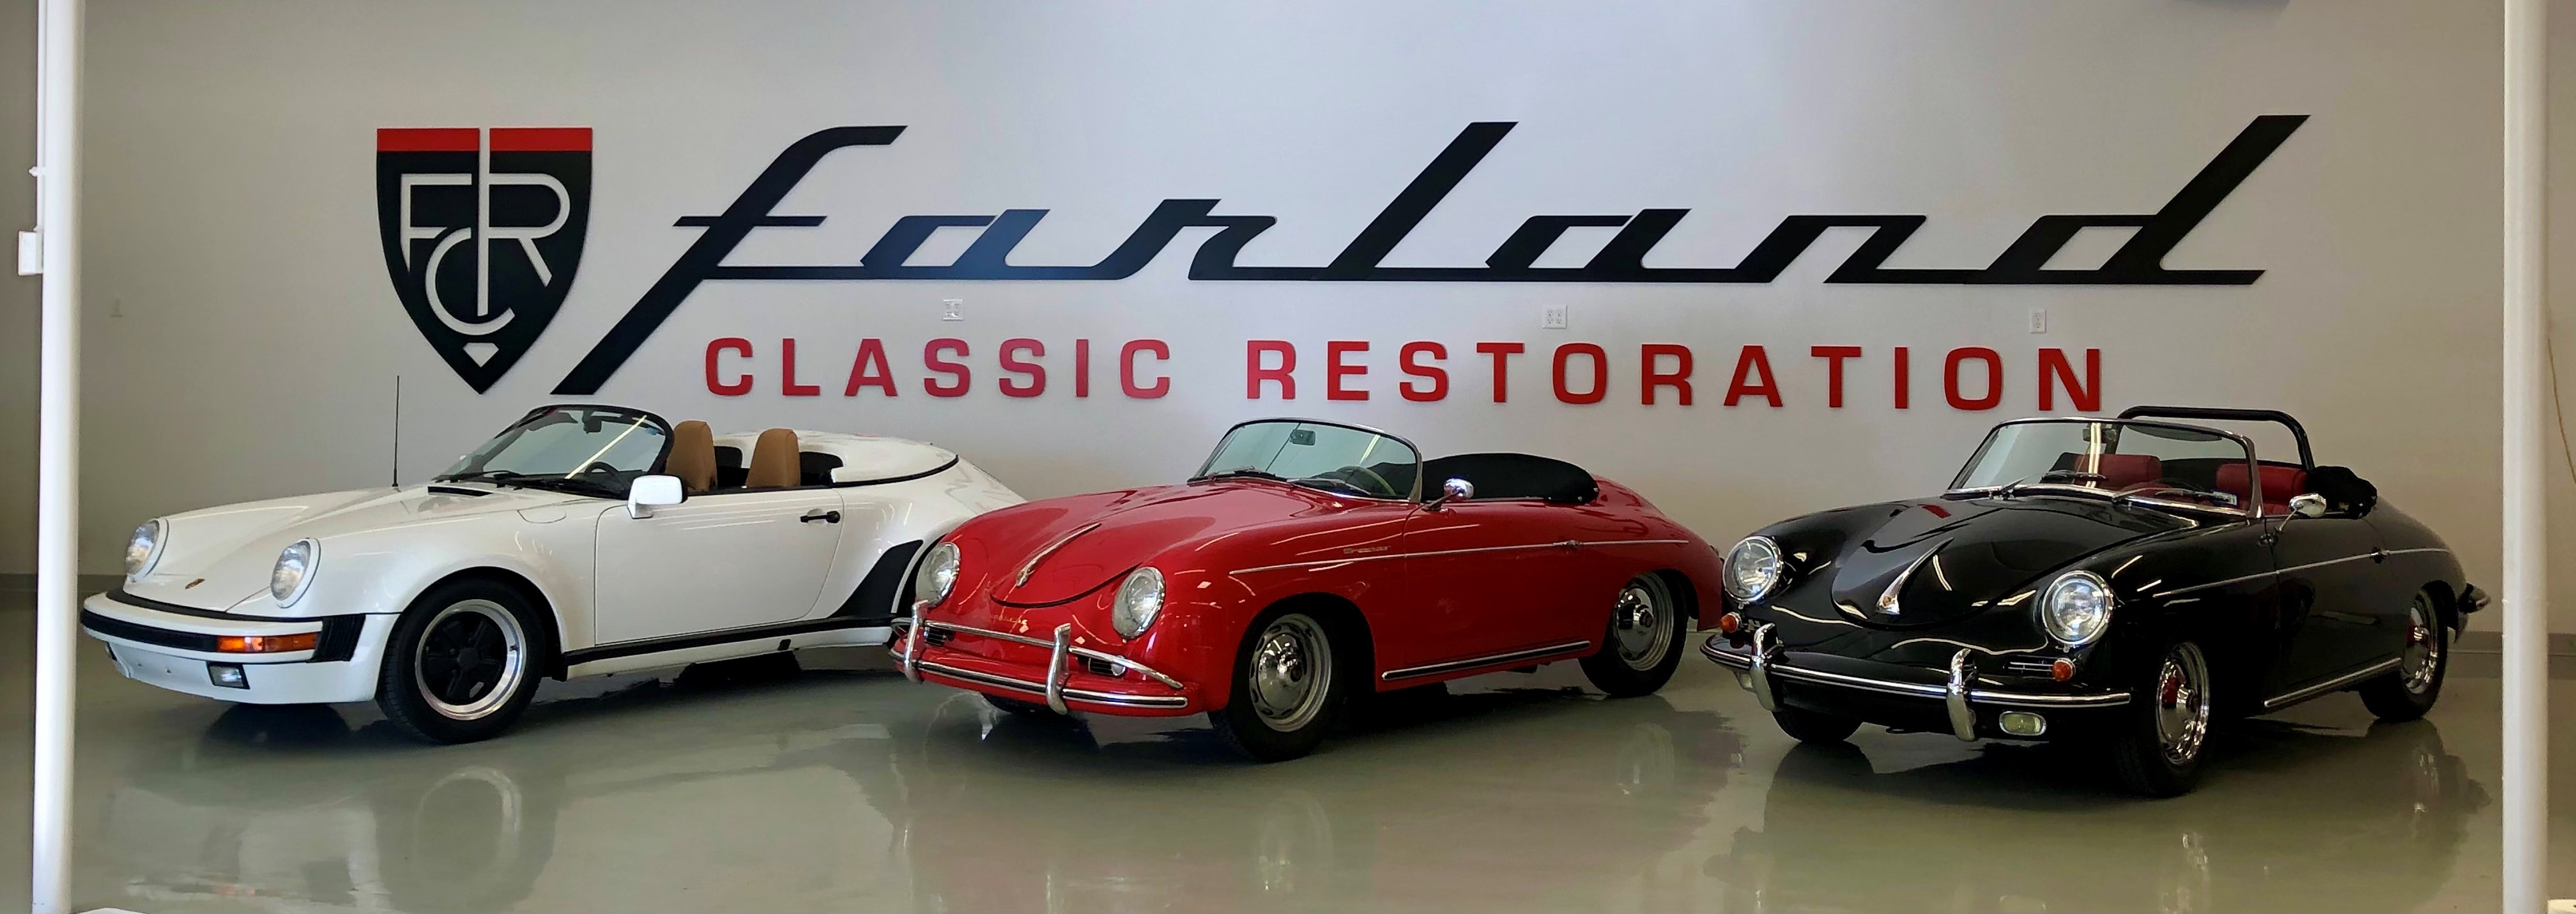 Farland Classic Restoration Porsche